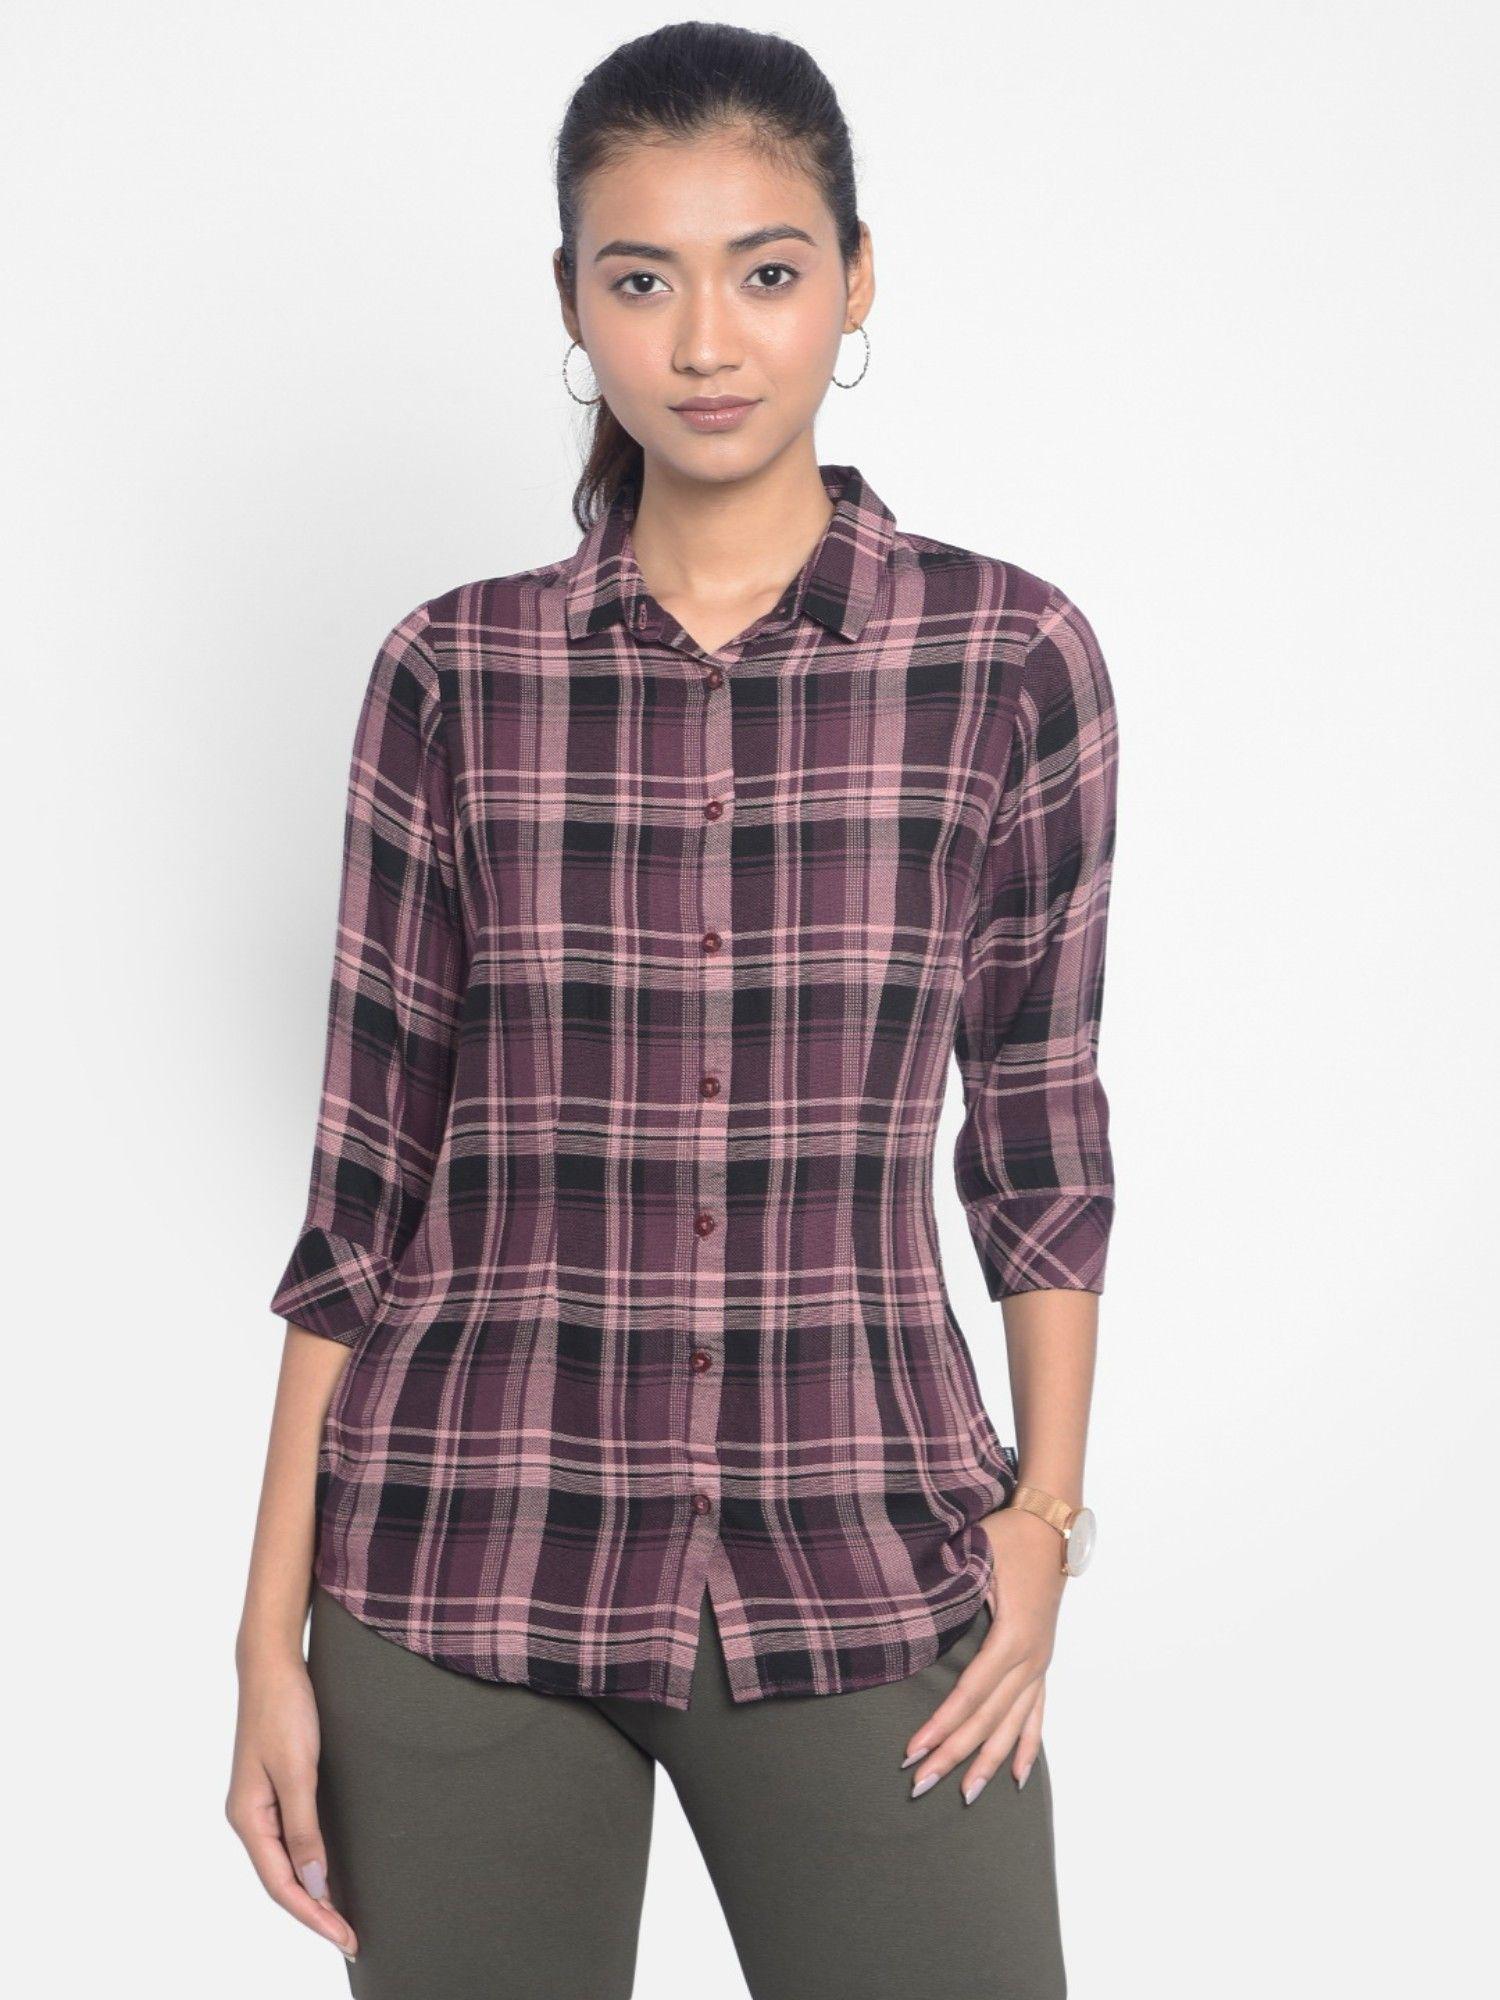 women's-brown-checked-shirt